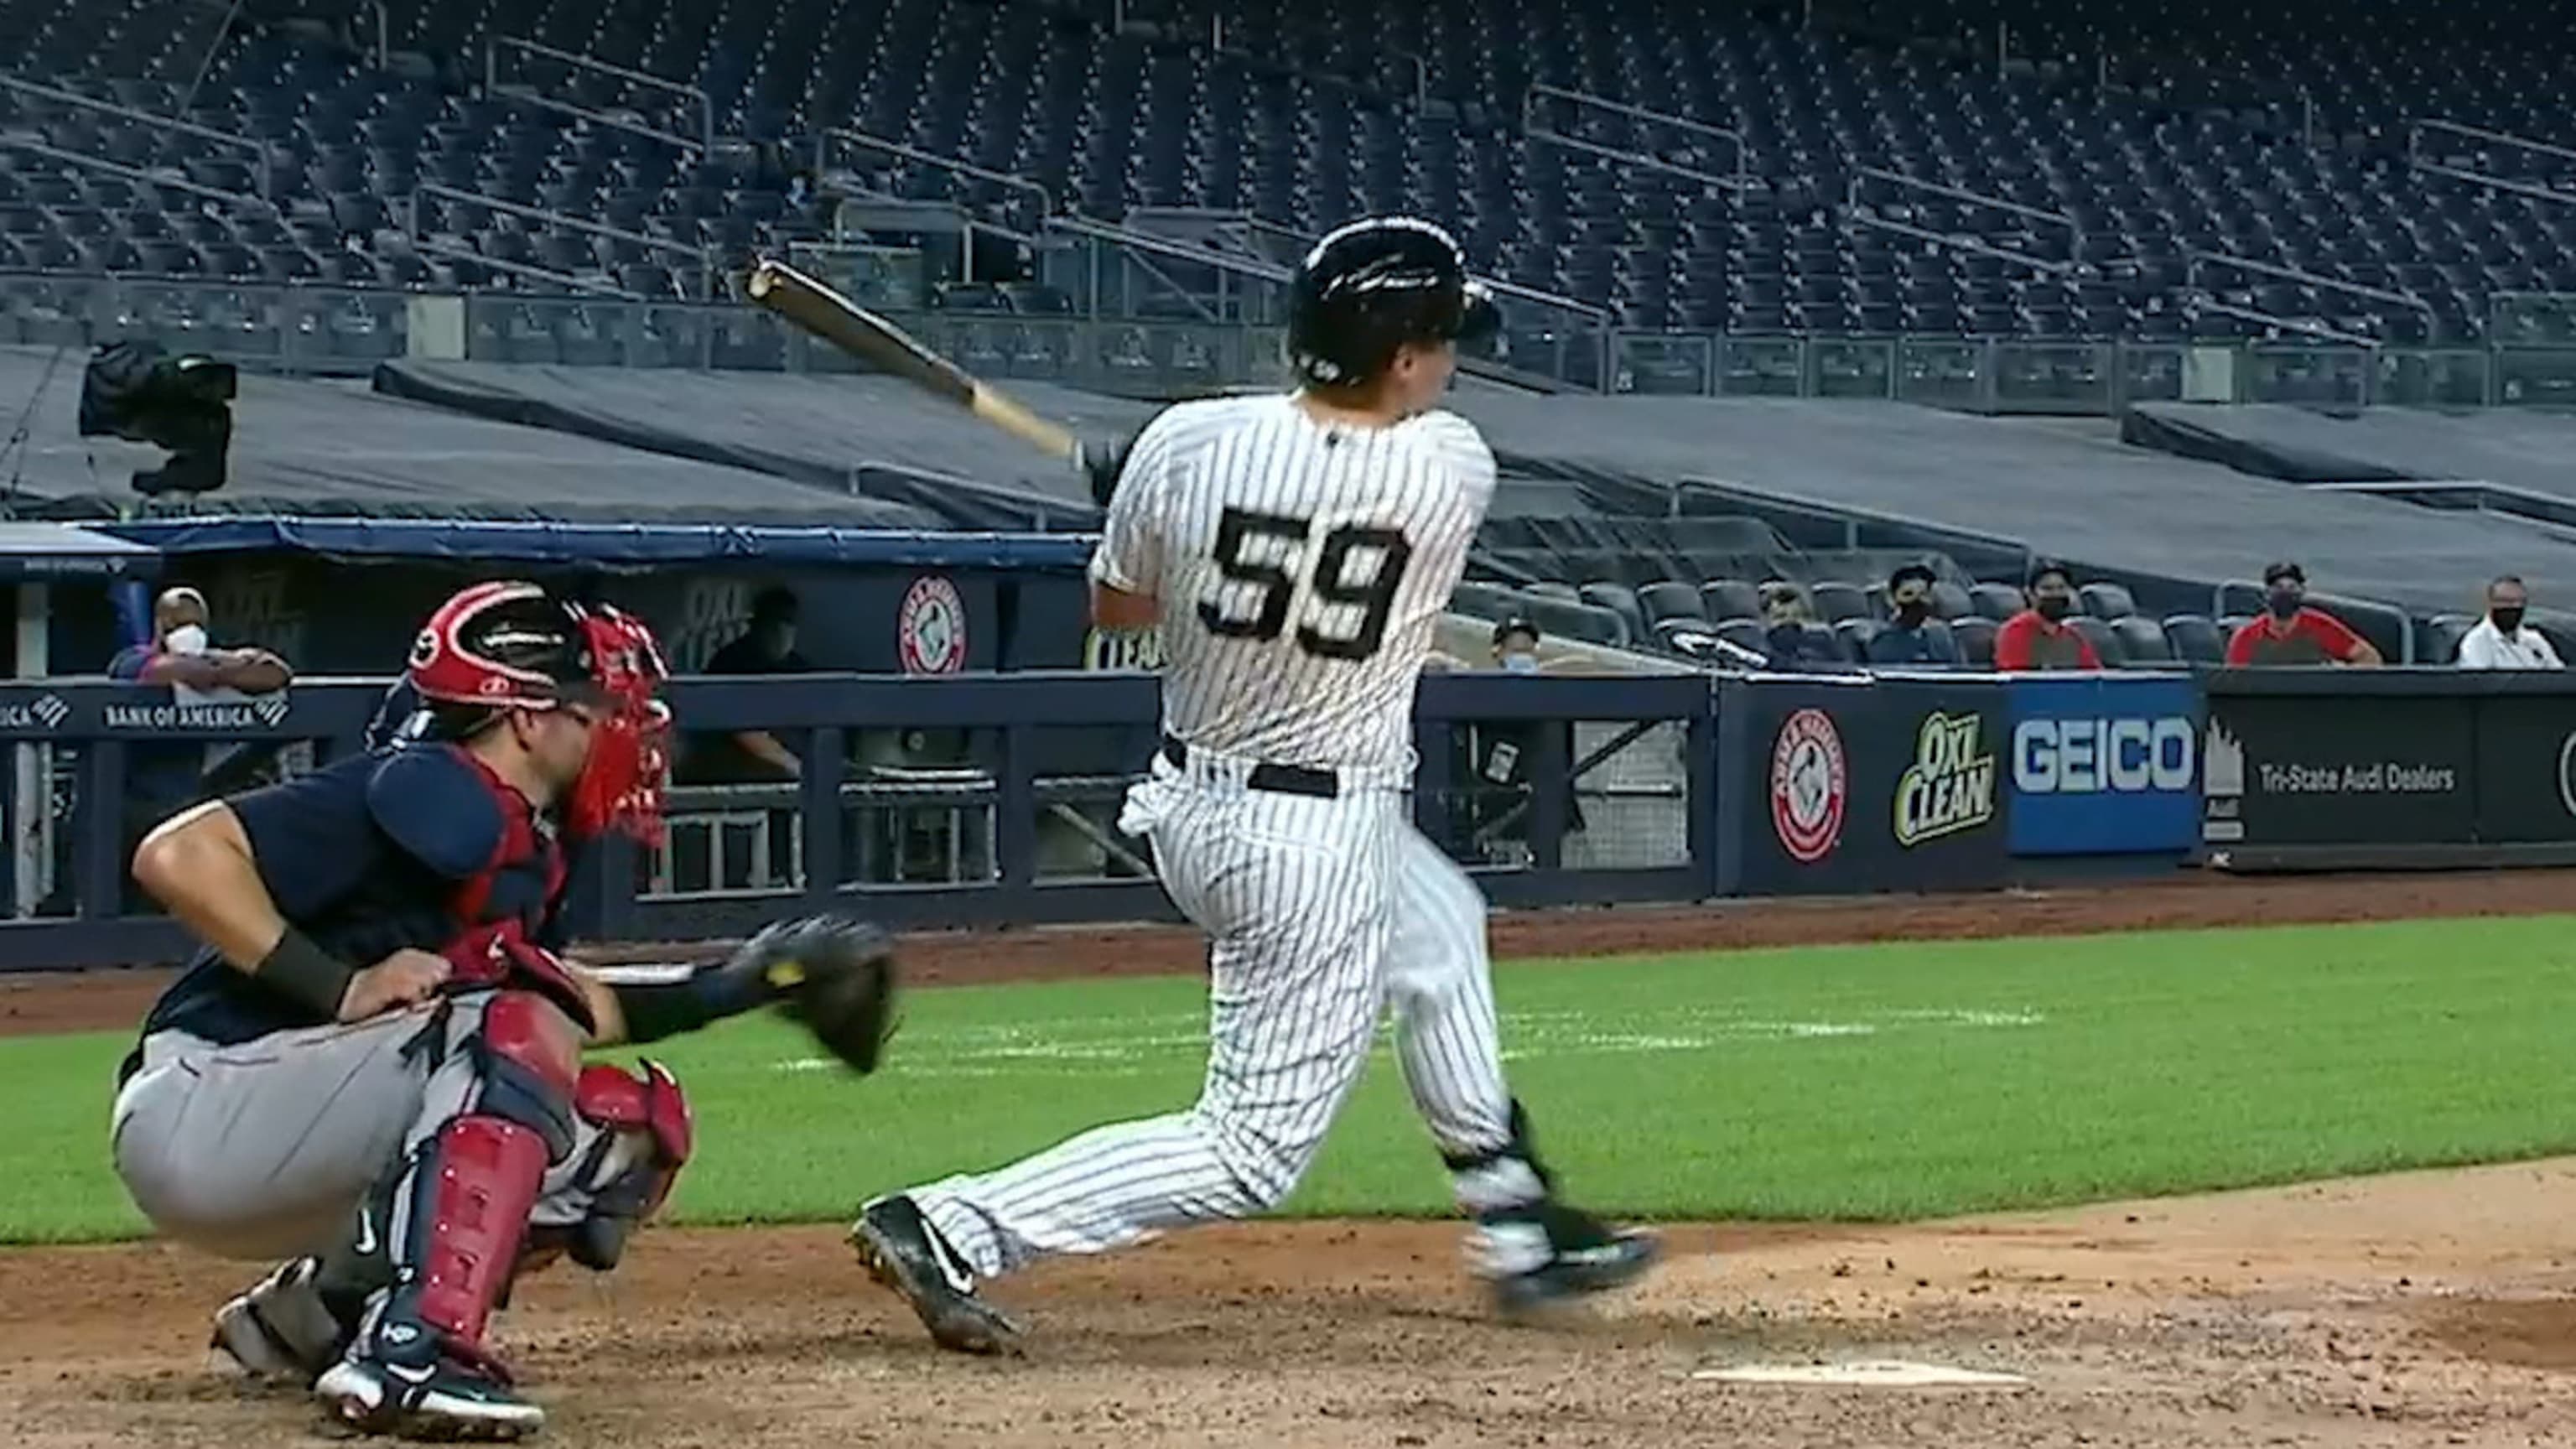 New York Yankees Aaron Judge 62 ***Clean Home Run King*** T-Shirt